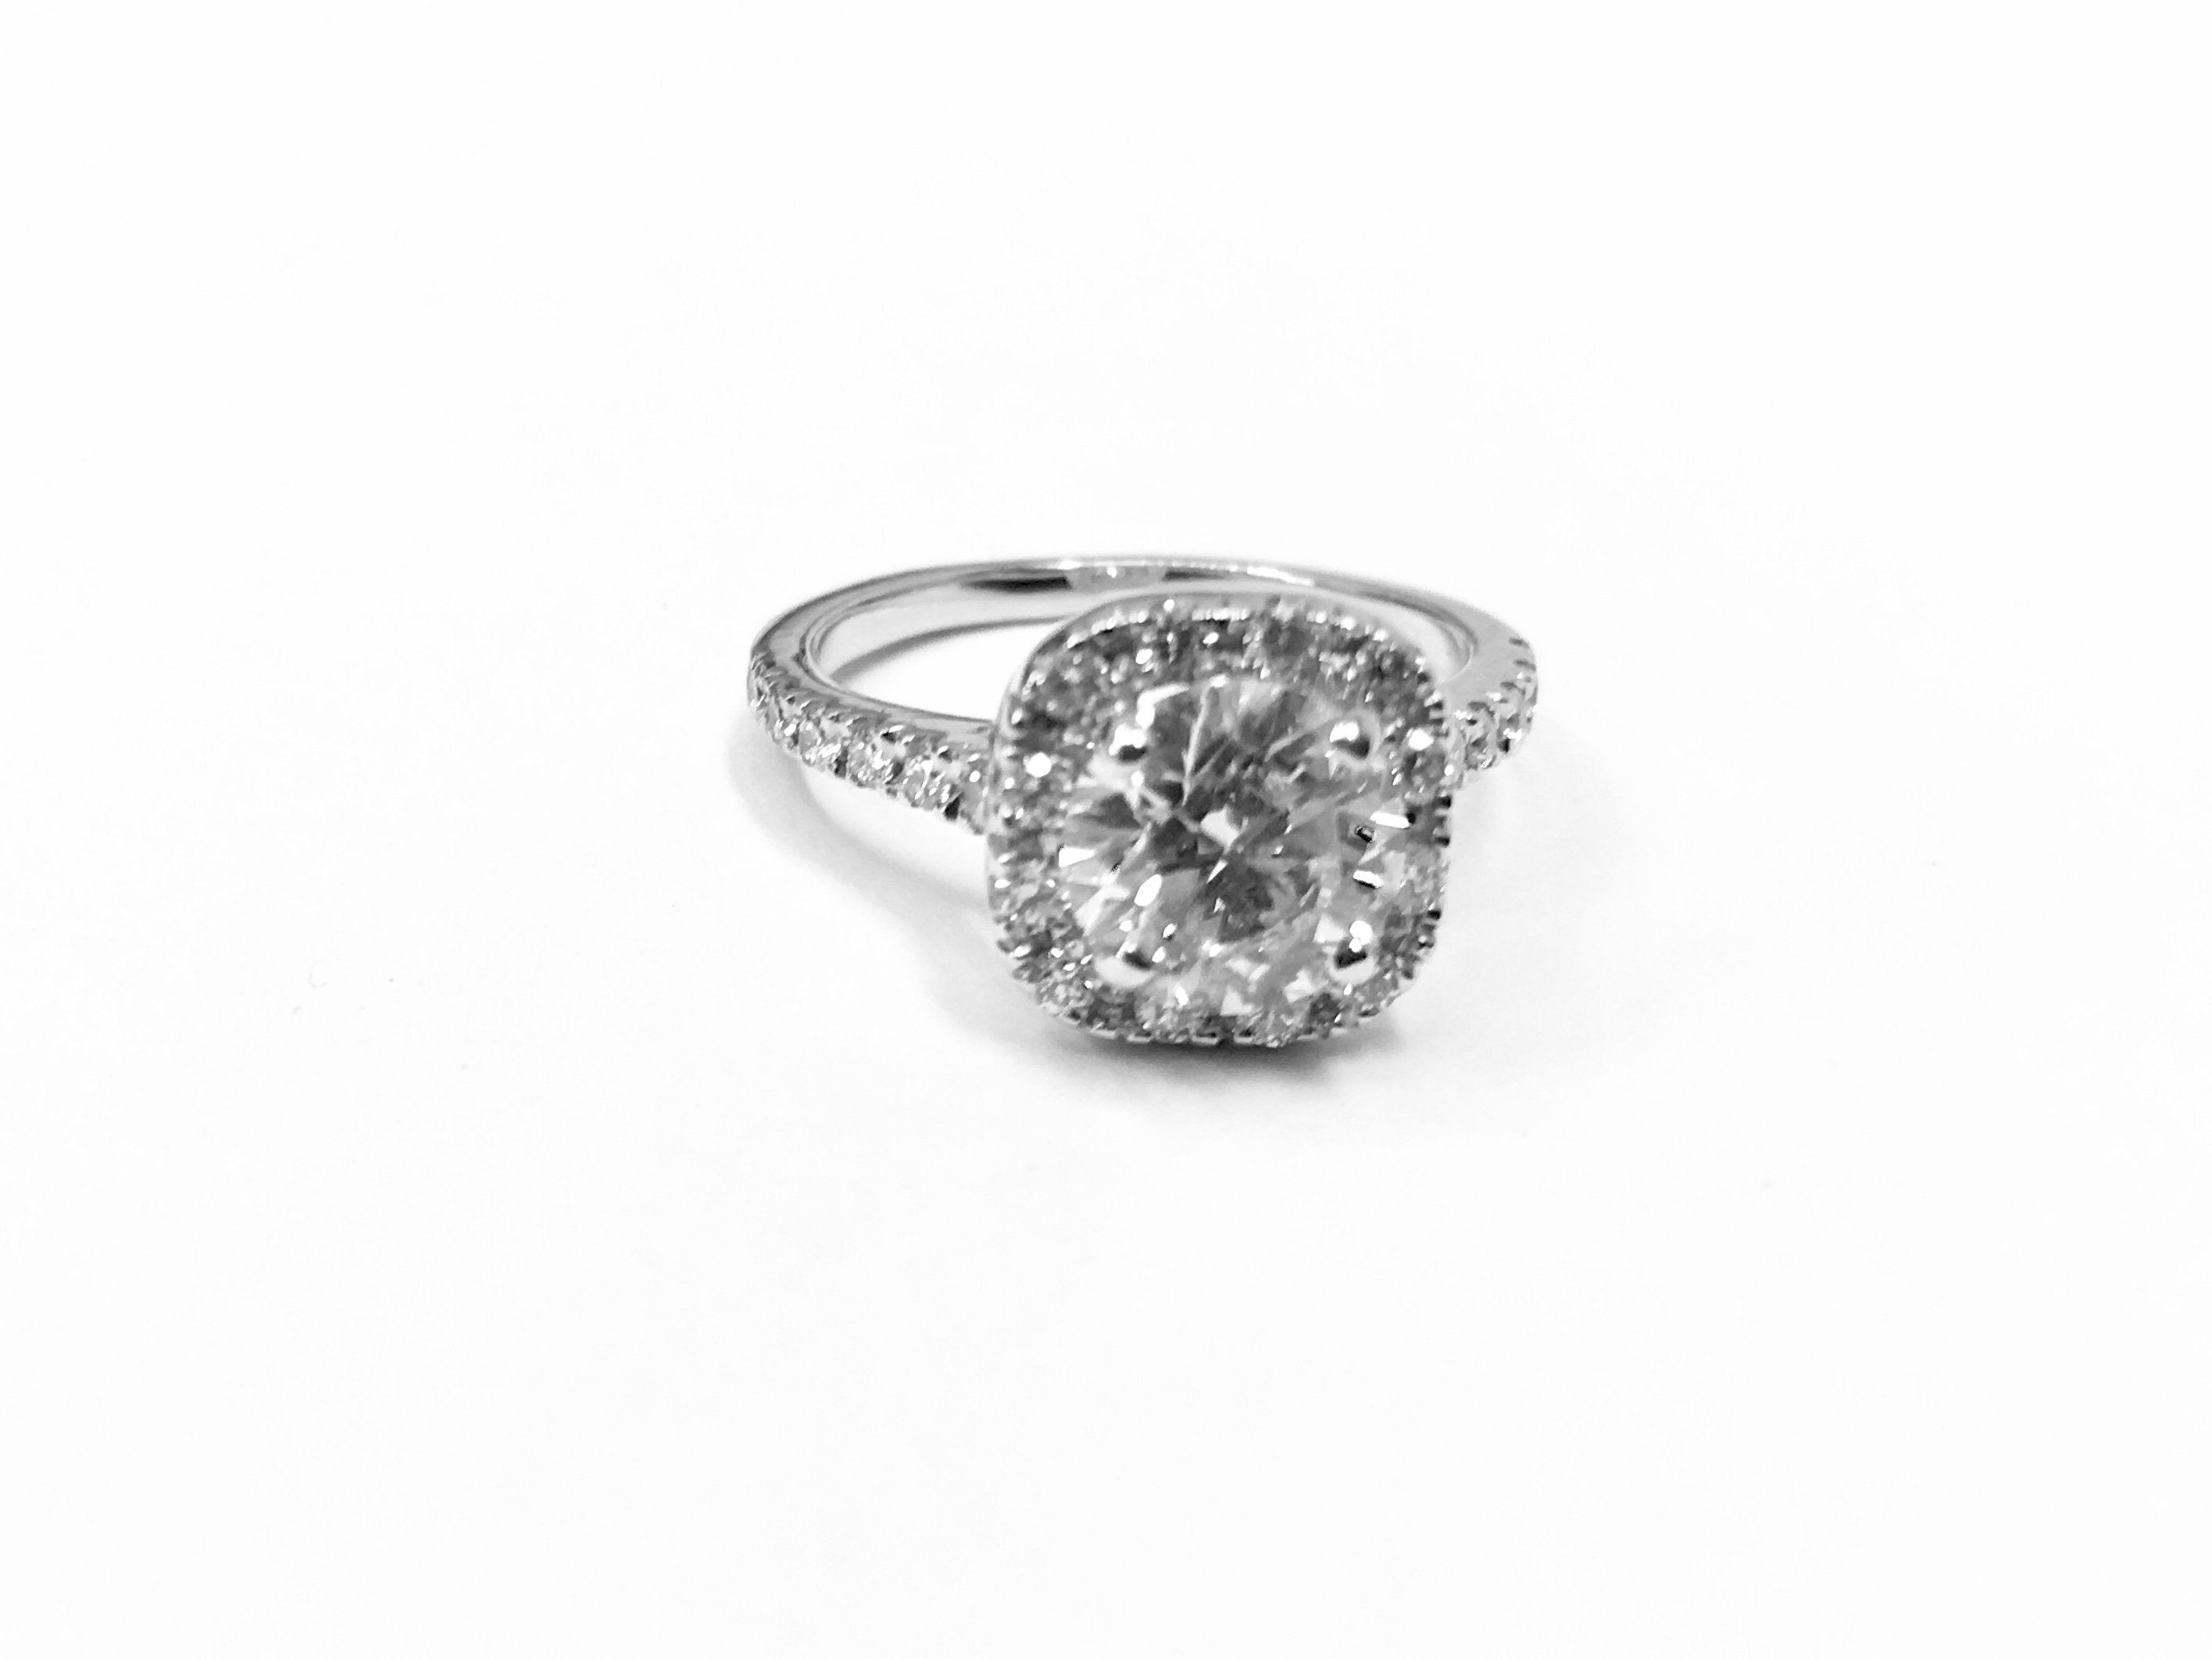 1.25ct diamond halo ring set in 18ct white gold - Image 7 of 24